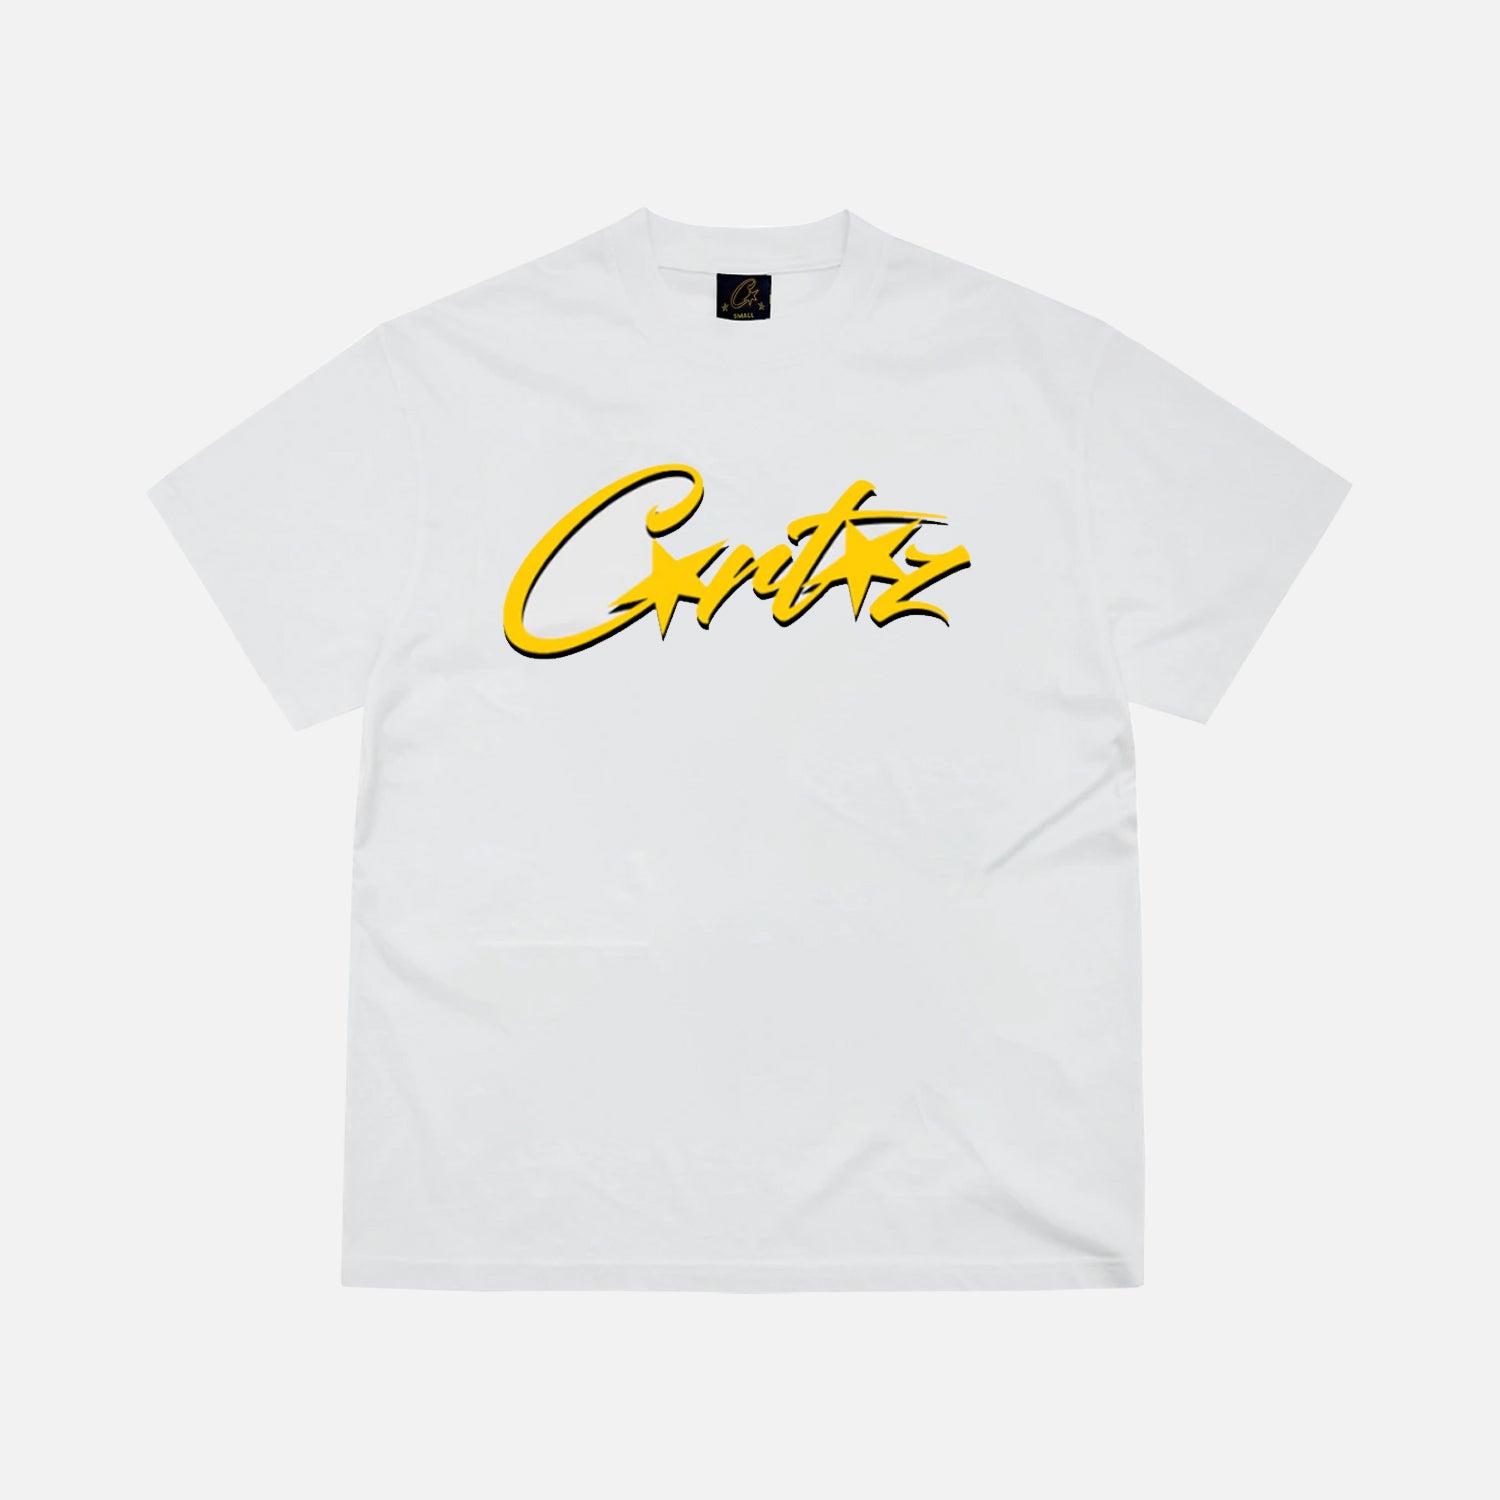 Corteiz RTW Allstarz T-Shirt - White / Yellow